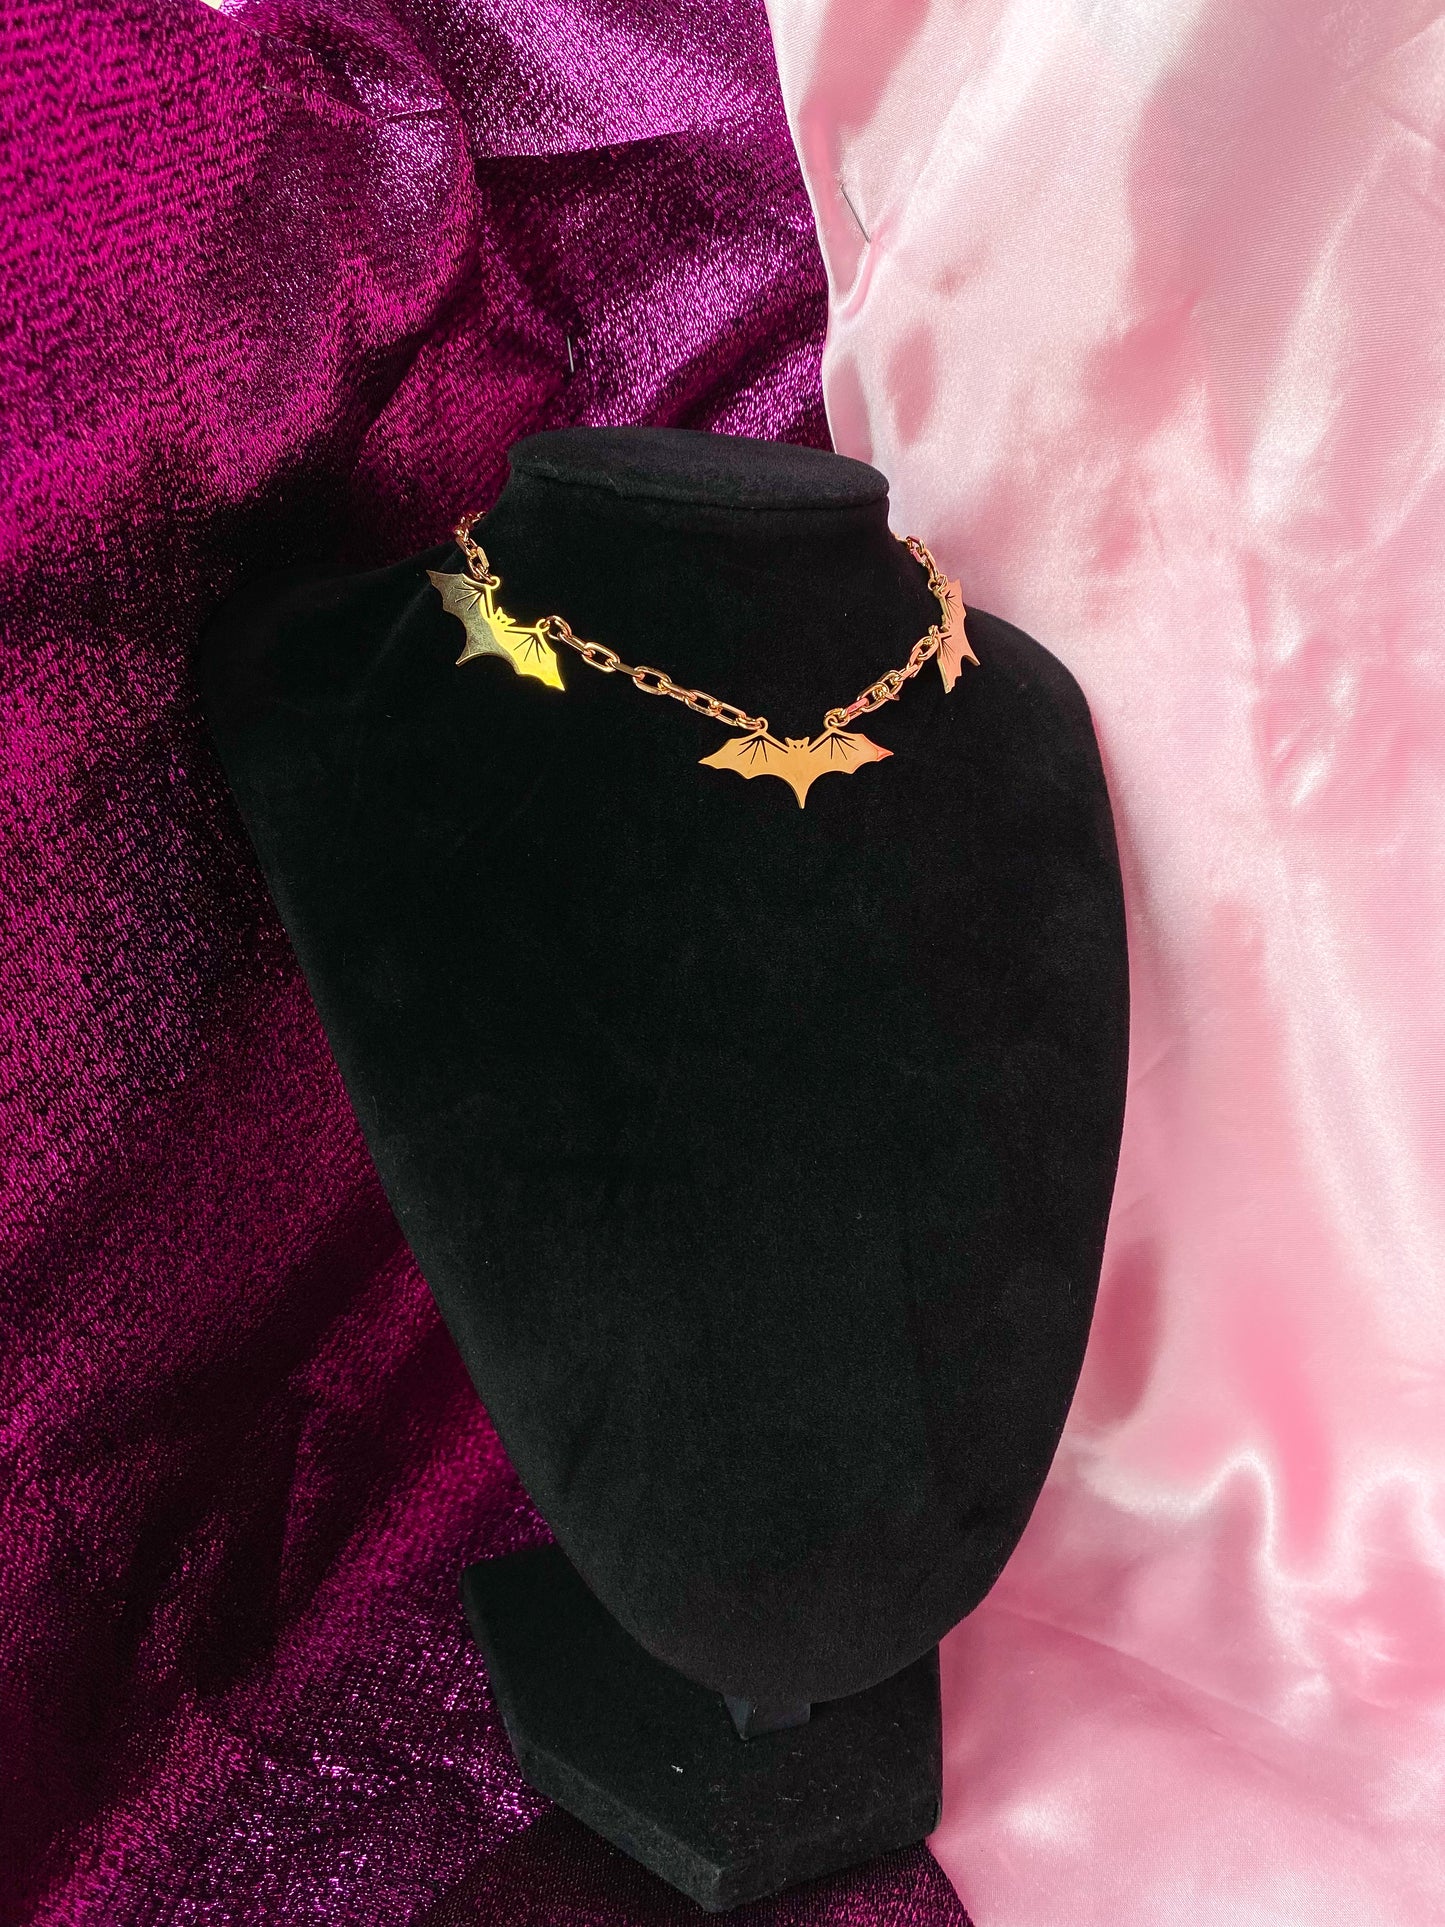 Golden flying bat necklace, golden colour handmade halloween necklace